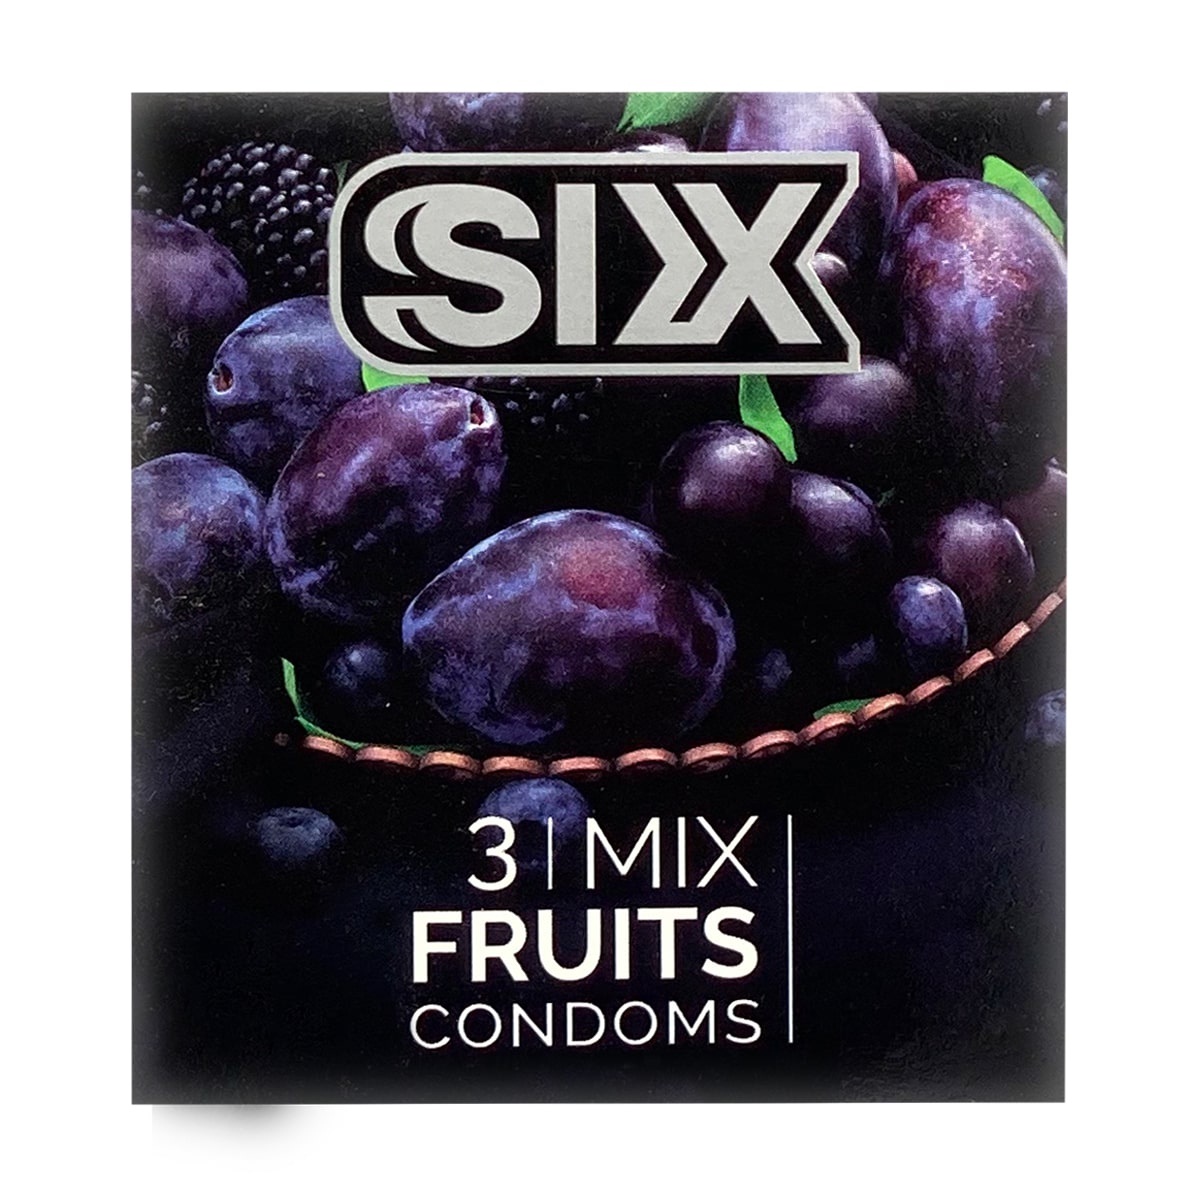 کاندوم سیکس مدل Mix Fruits بسته 3 عددی